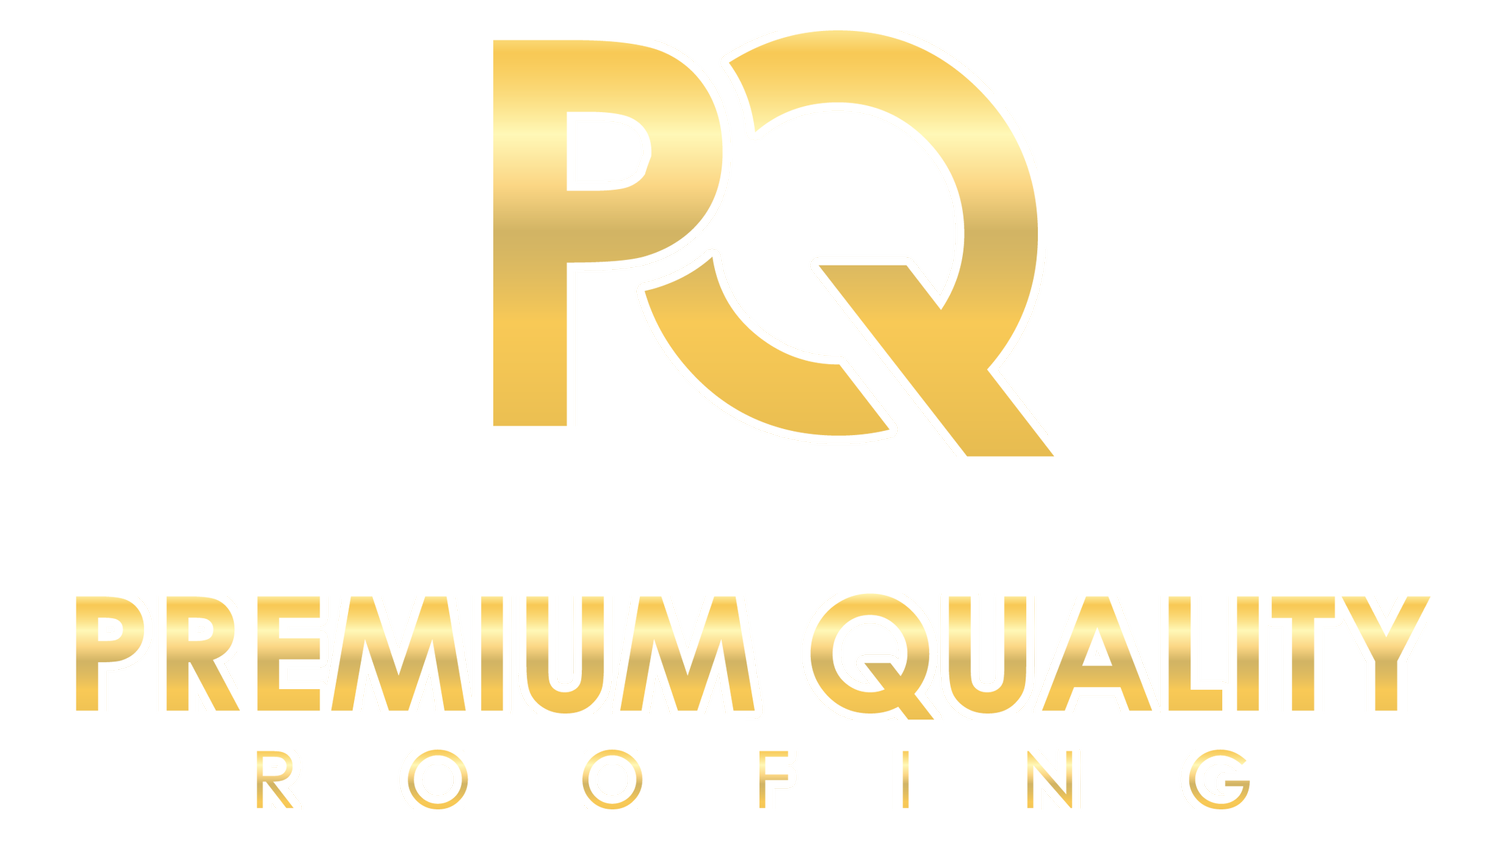 Premium Quality Roofing